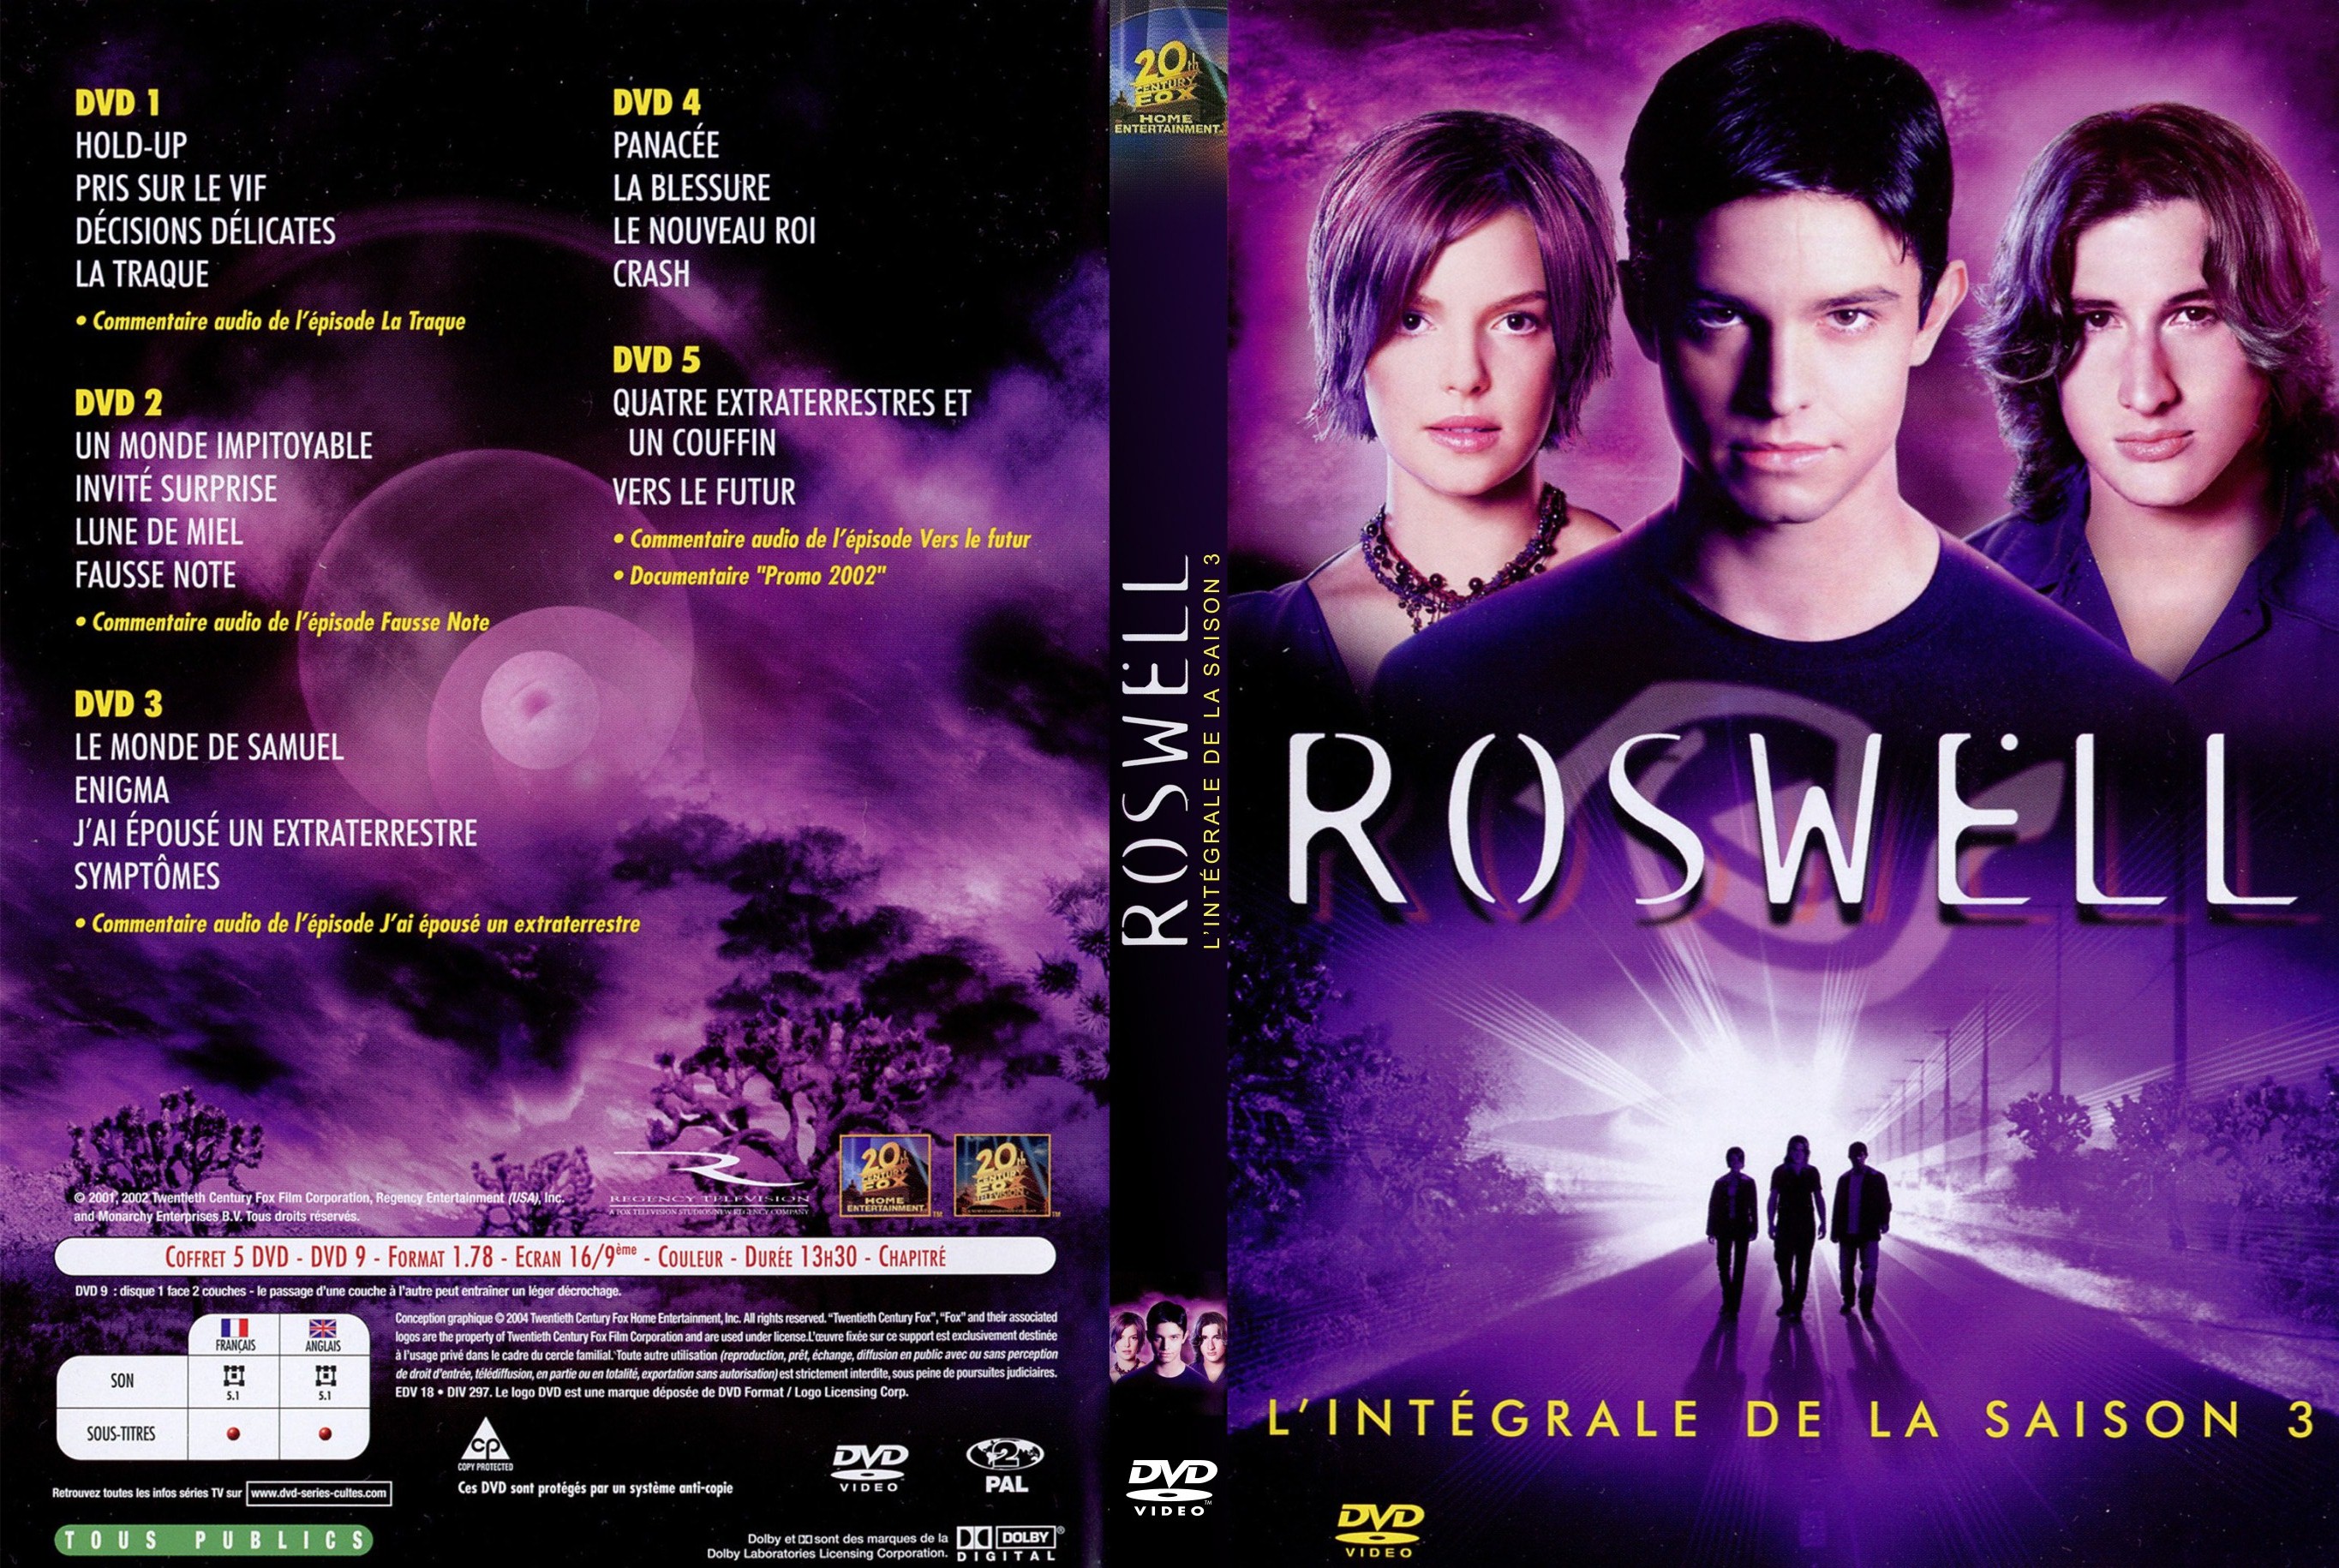 Jaquette DVD Roswell saison 3 custom